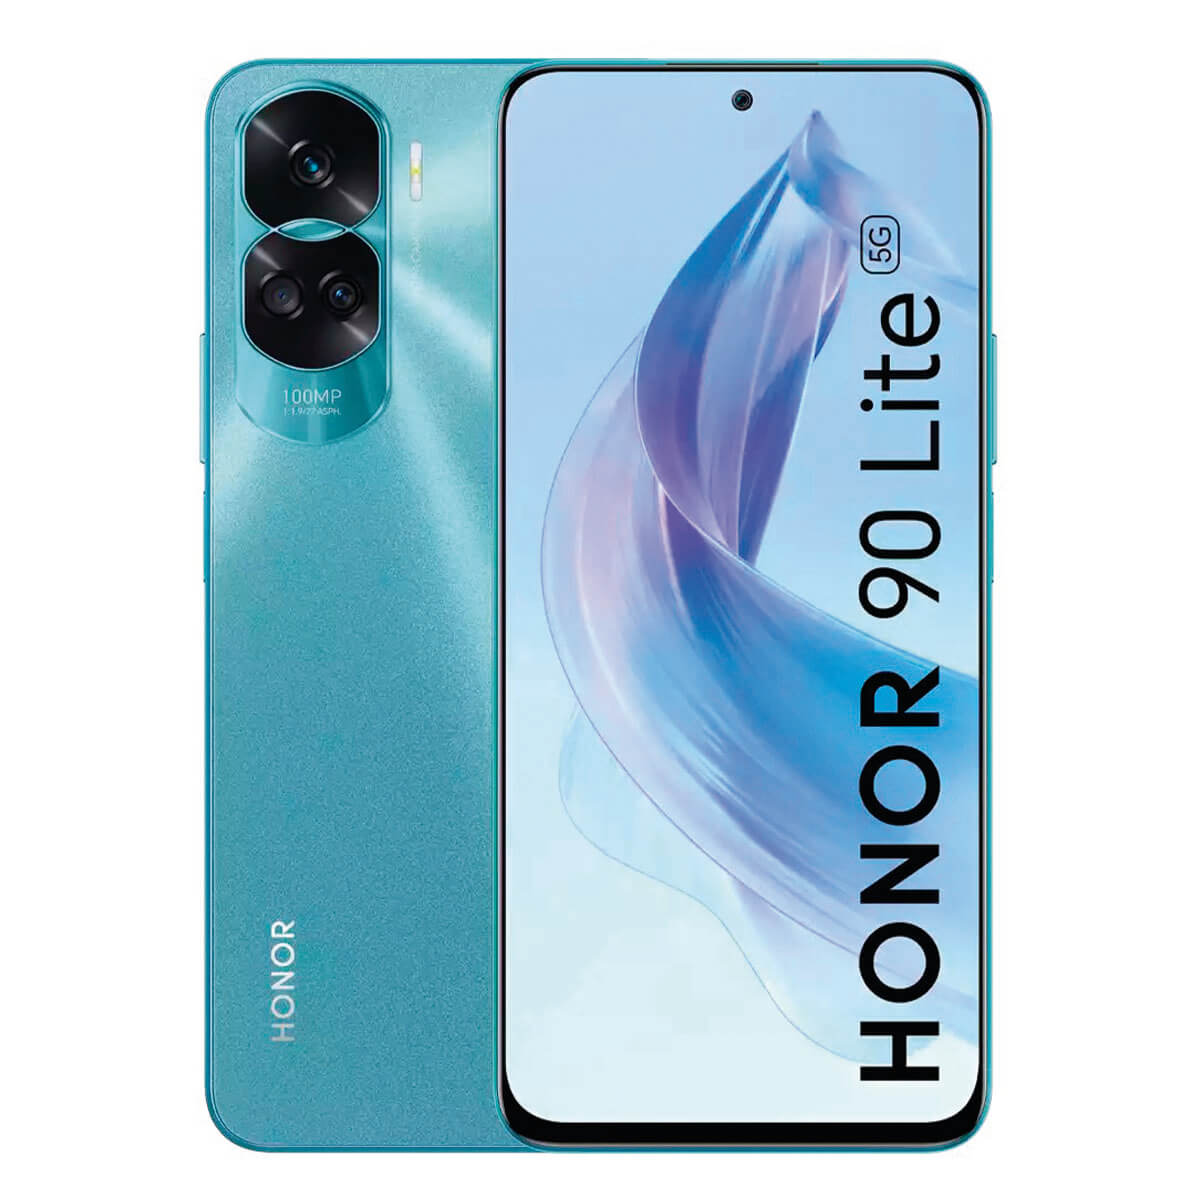 Honor 90 Lite Dual SIM 5G Smartphone, 8 GB RAM, 256 GB Storage